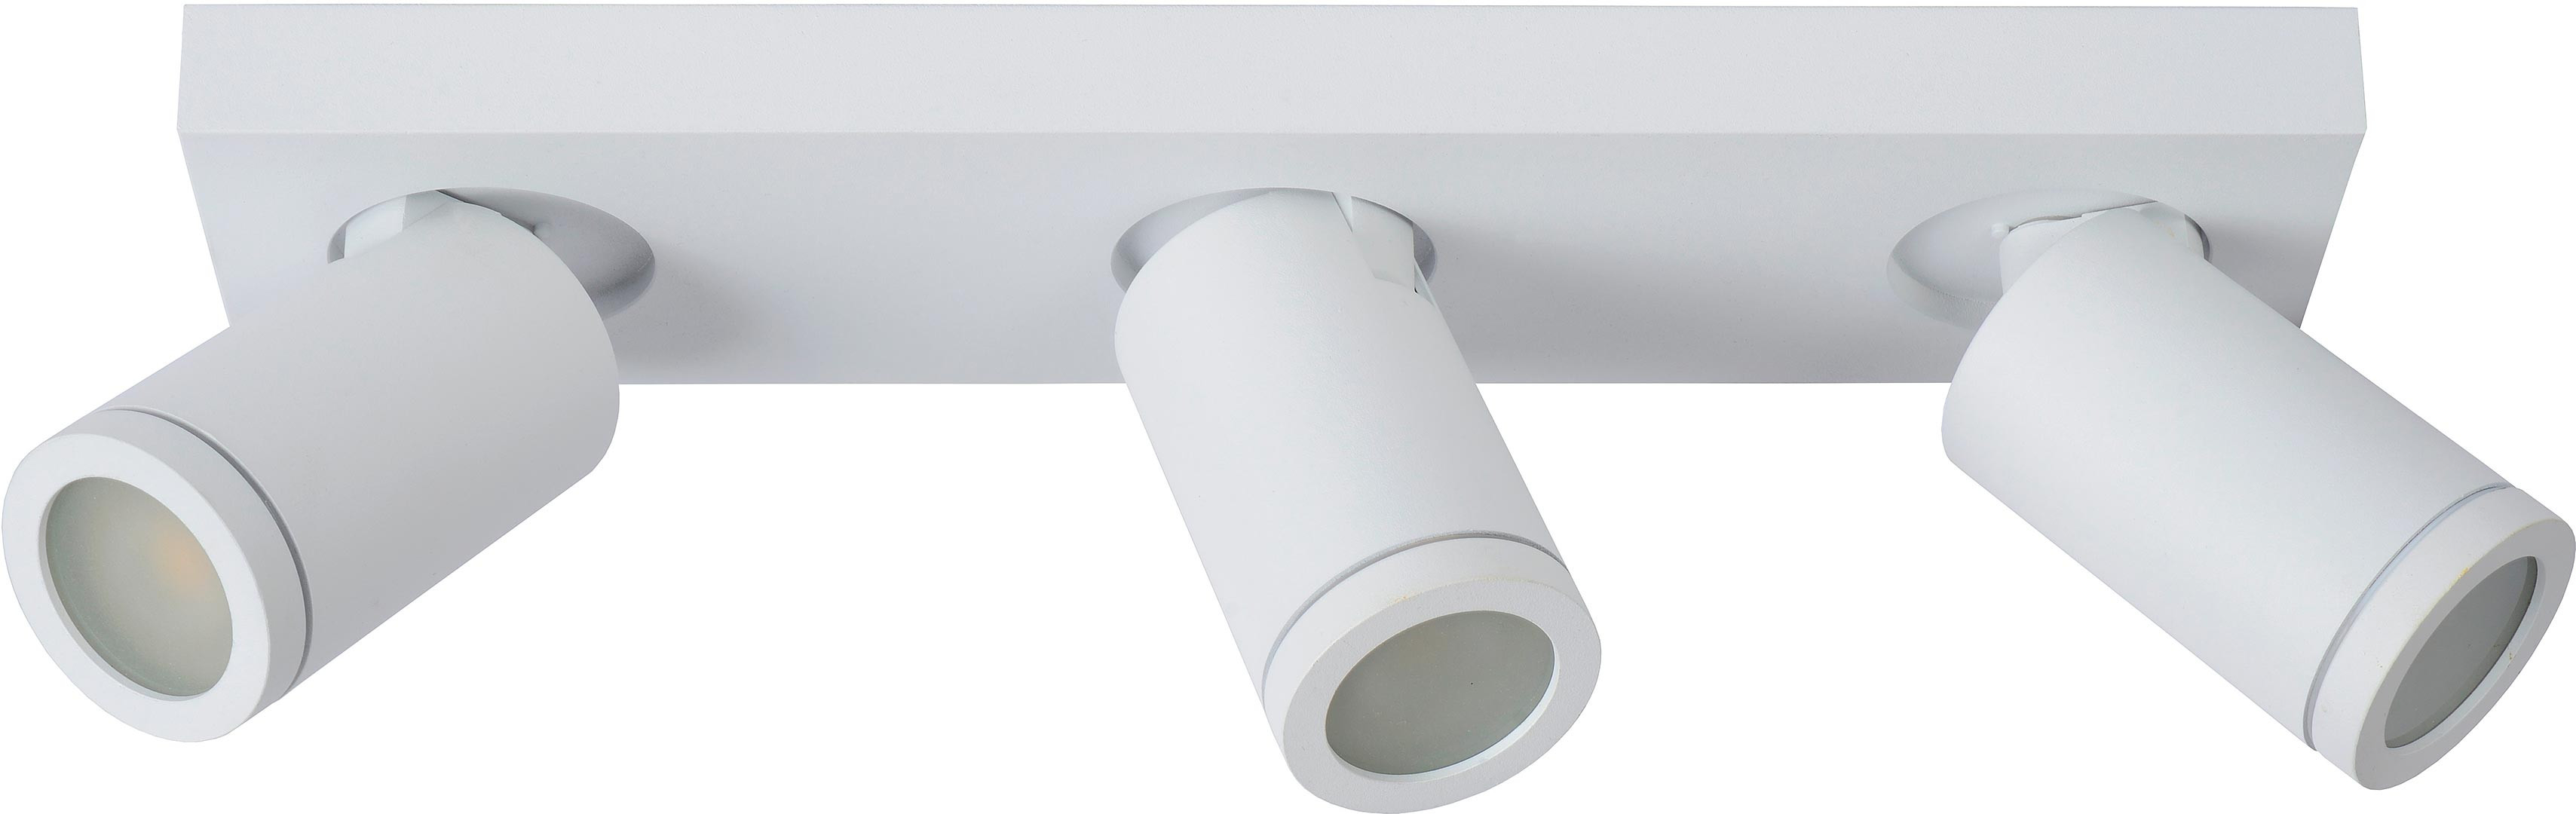 Spot plafond salle de bains LED 3x5W design Ewan